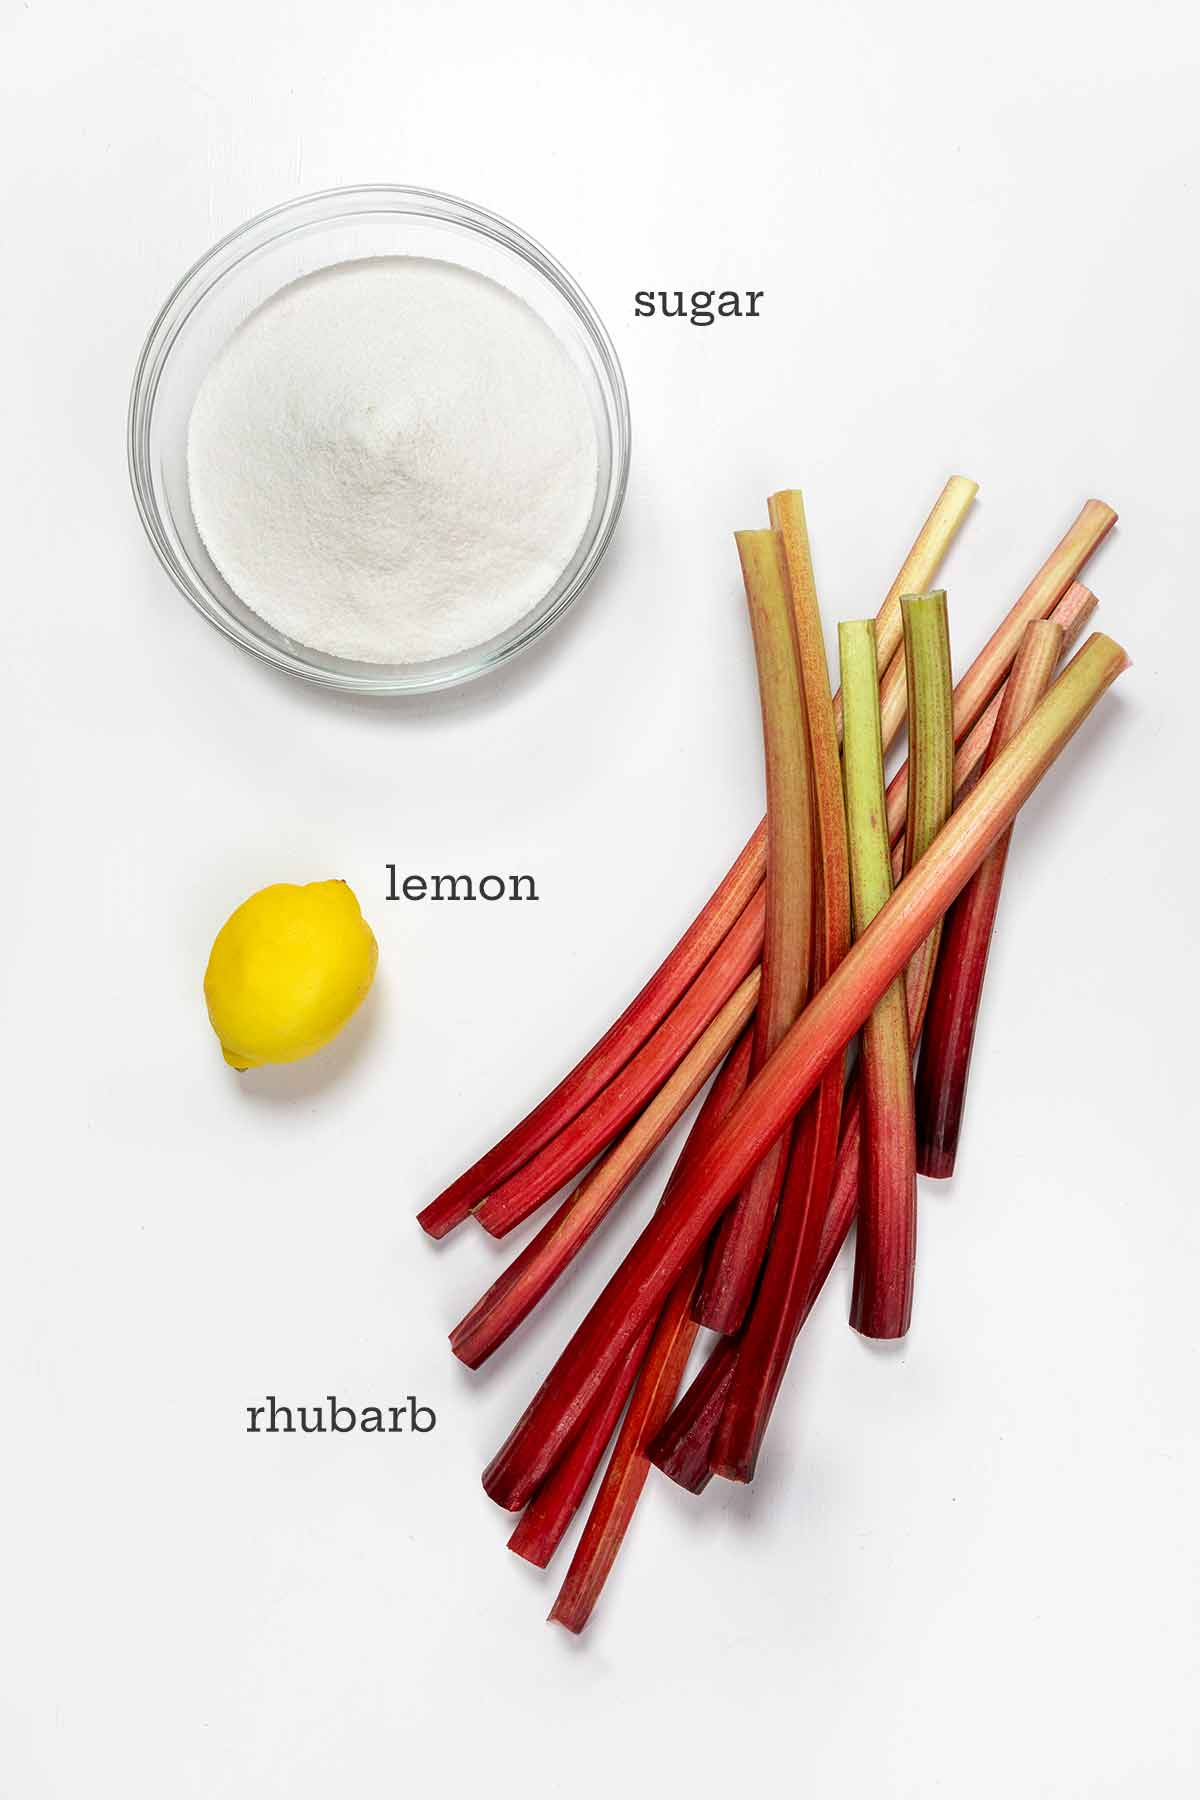 Ingredients for rhubarb jam -- sugar, lemon, and rhubarb.